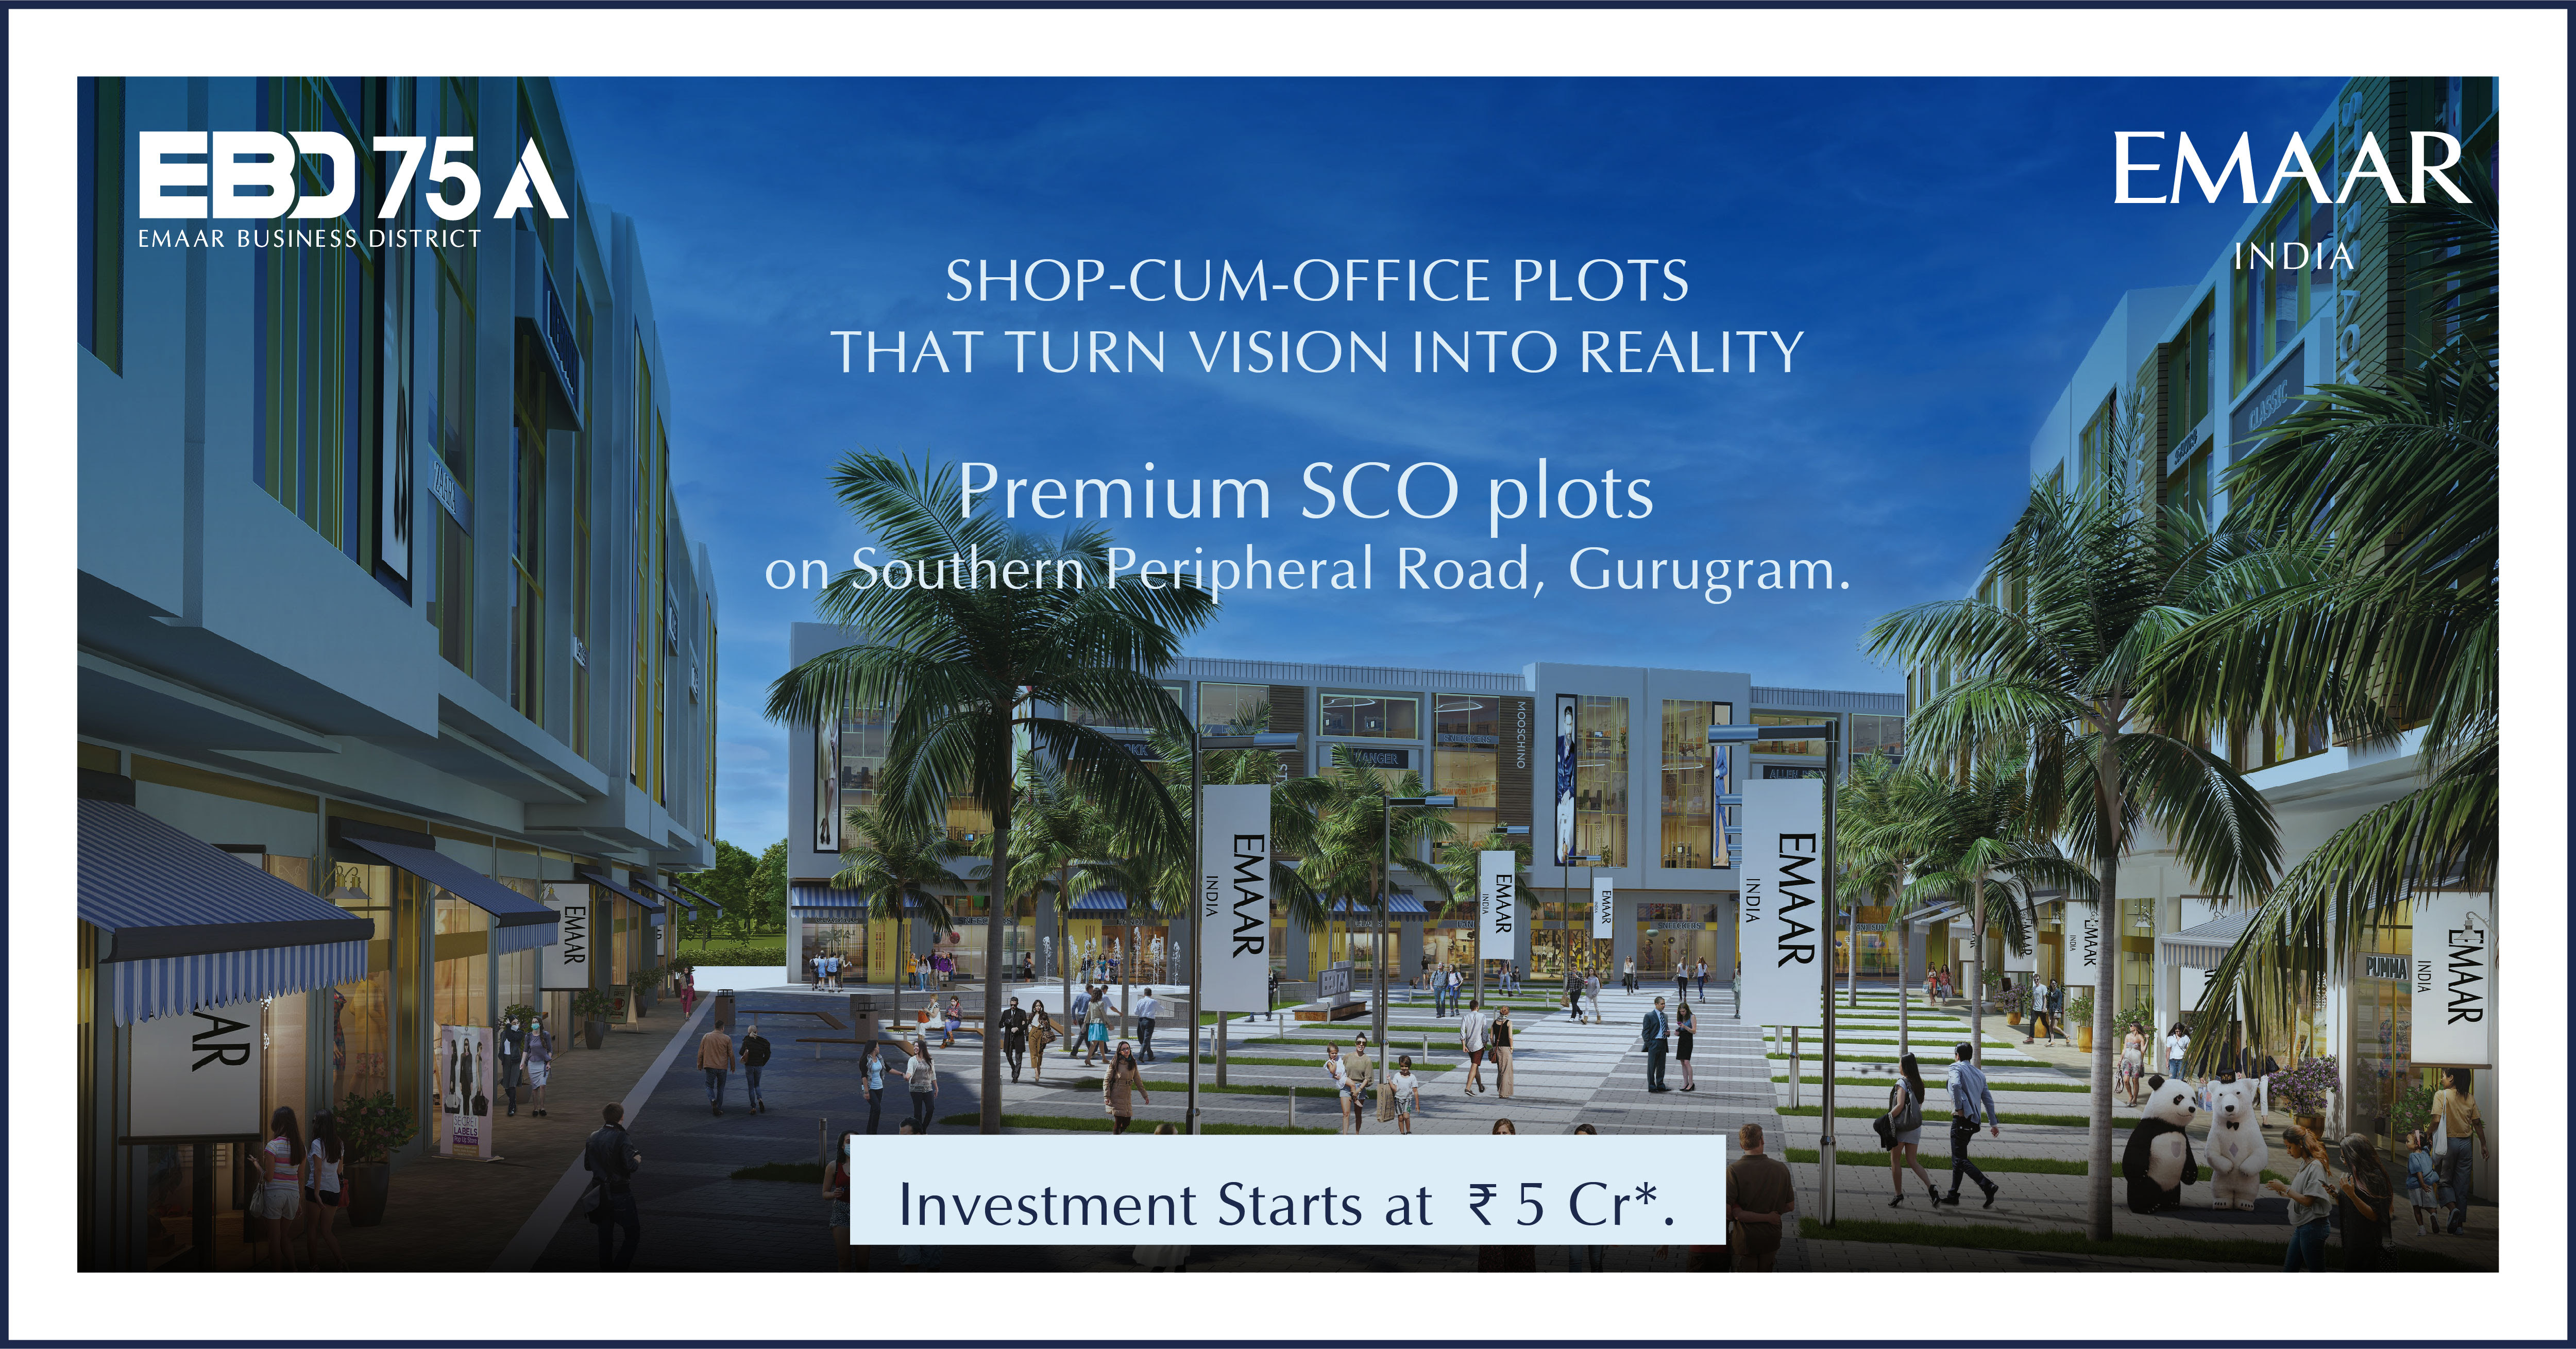 New launched premium SCO plots at Emaar EBD 75A, Gurgaon